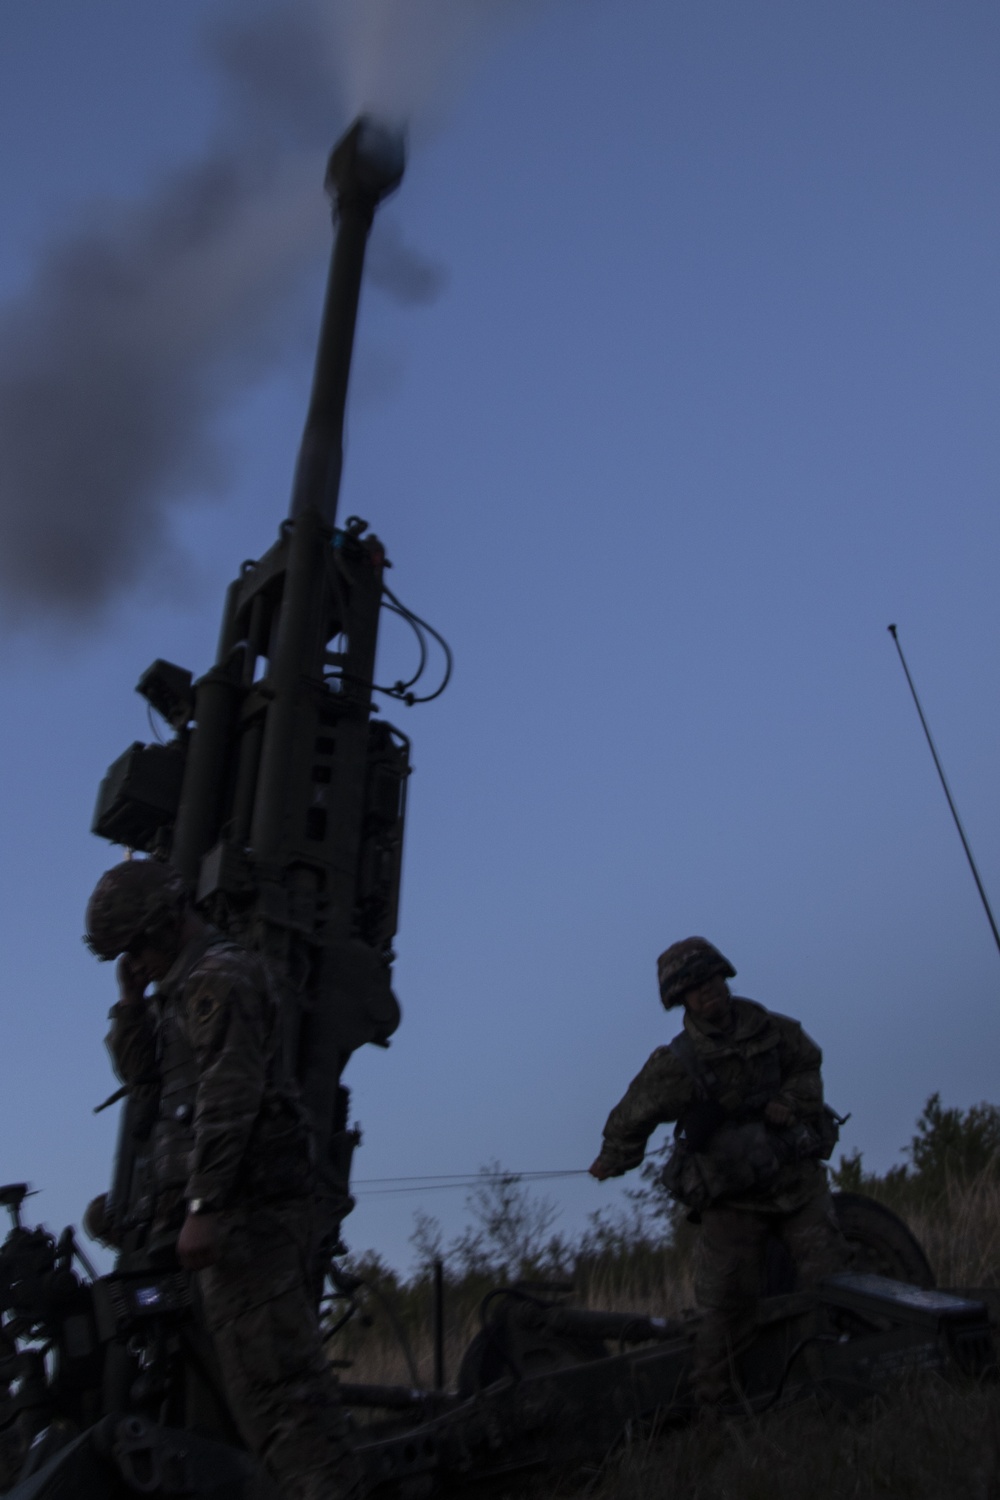 Thunderbird Artillery conducts night-fire training